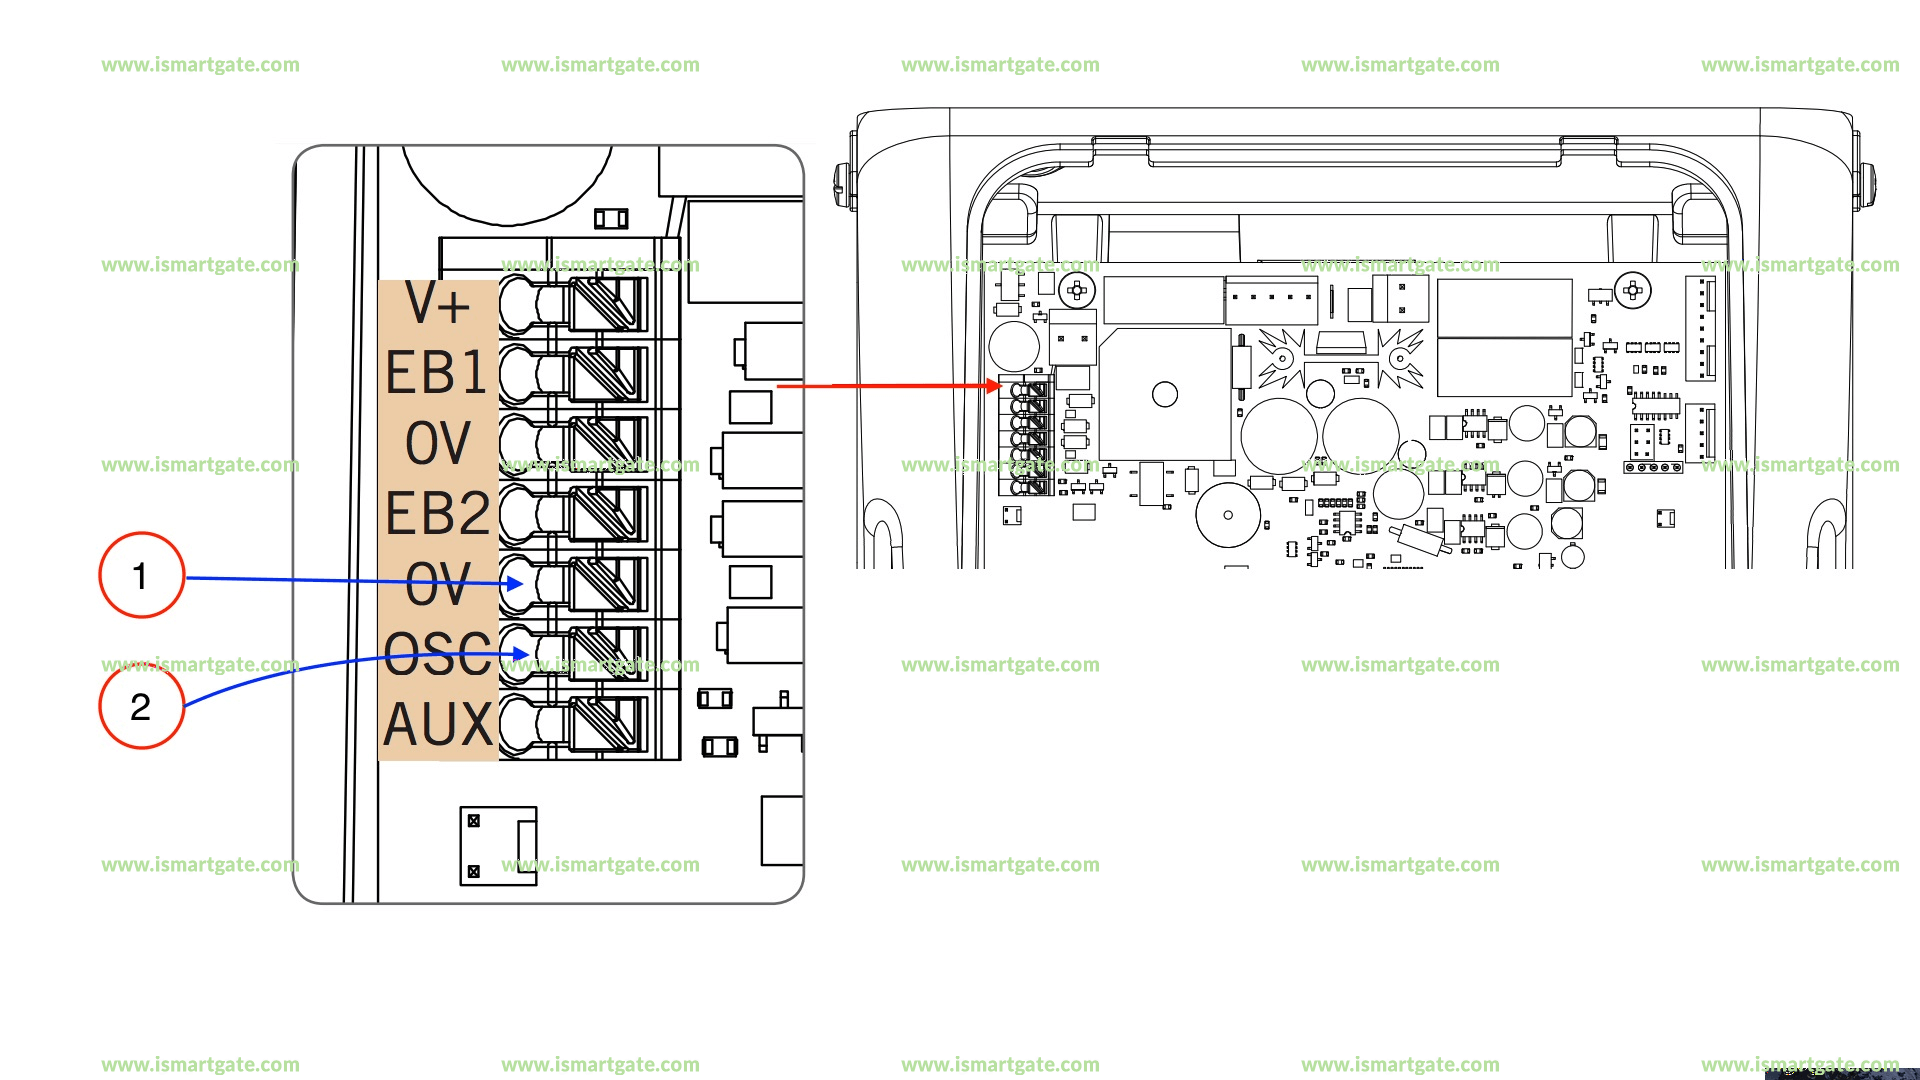 Wiring diagram for B&D Controll-A-Door Advance